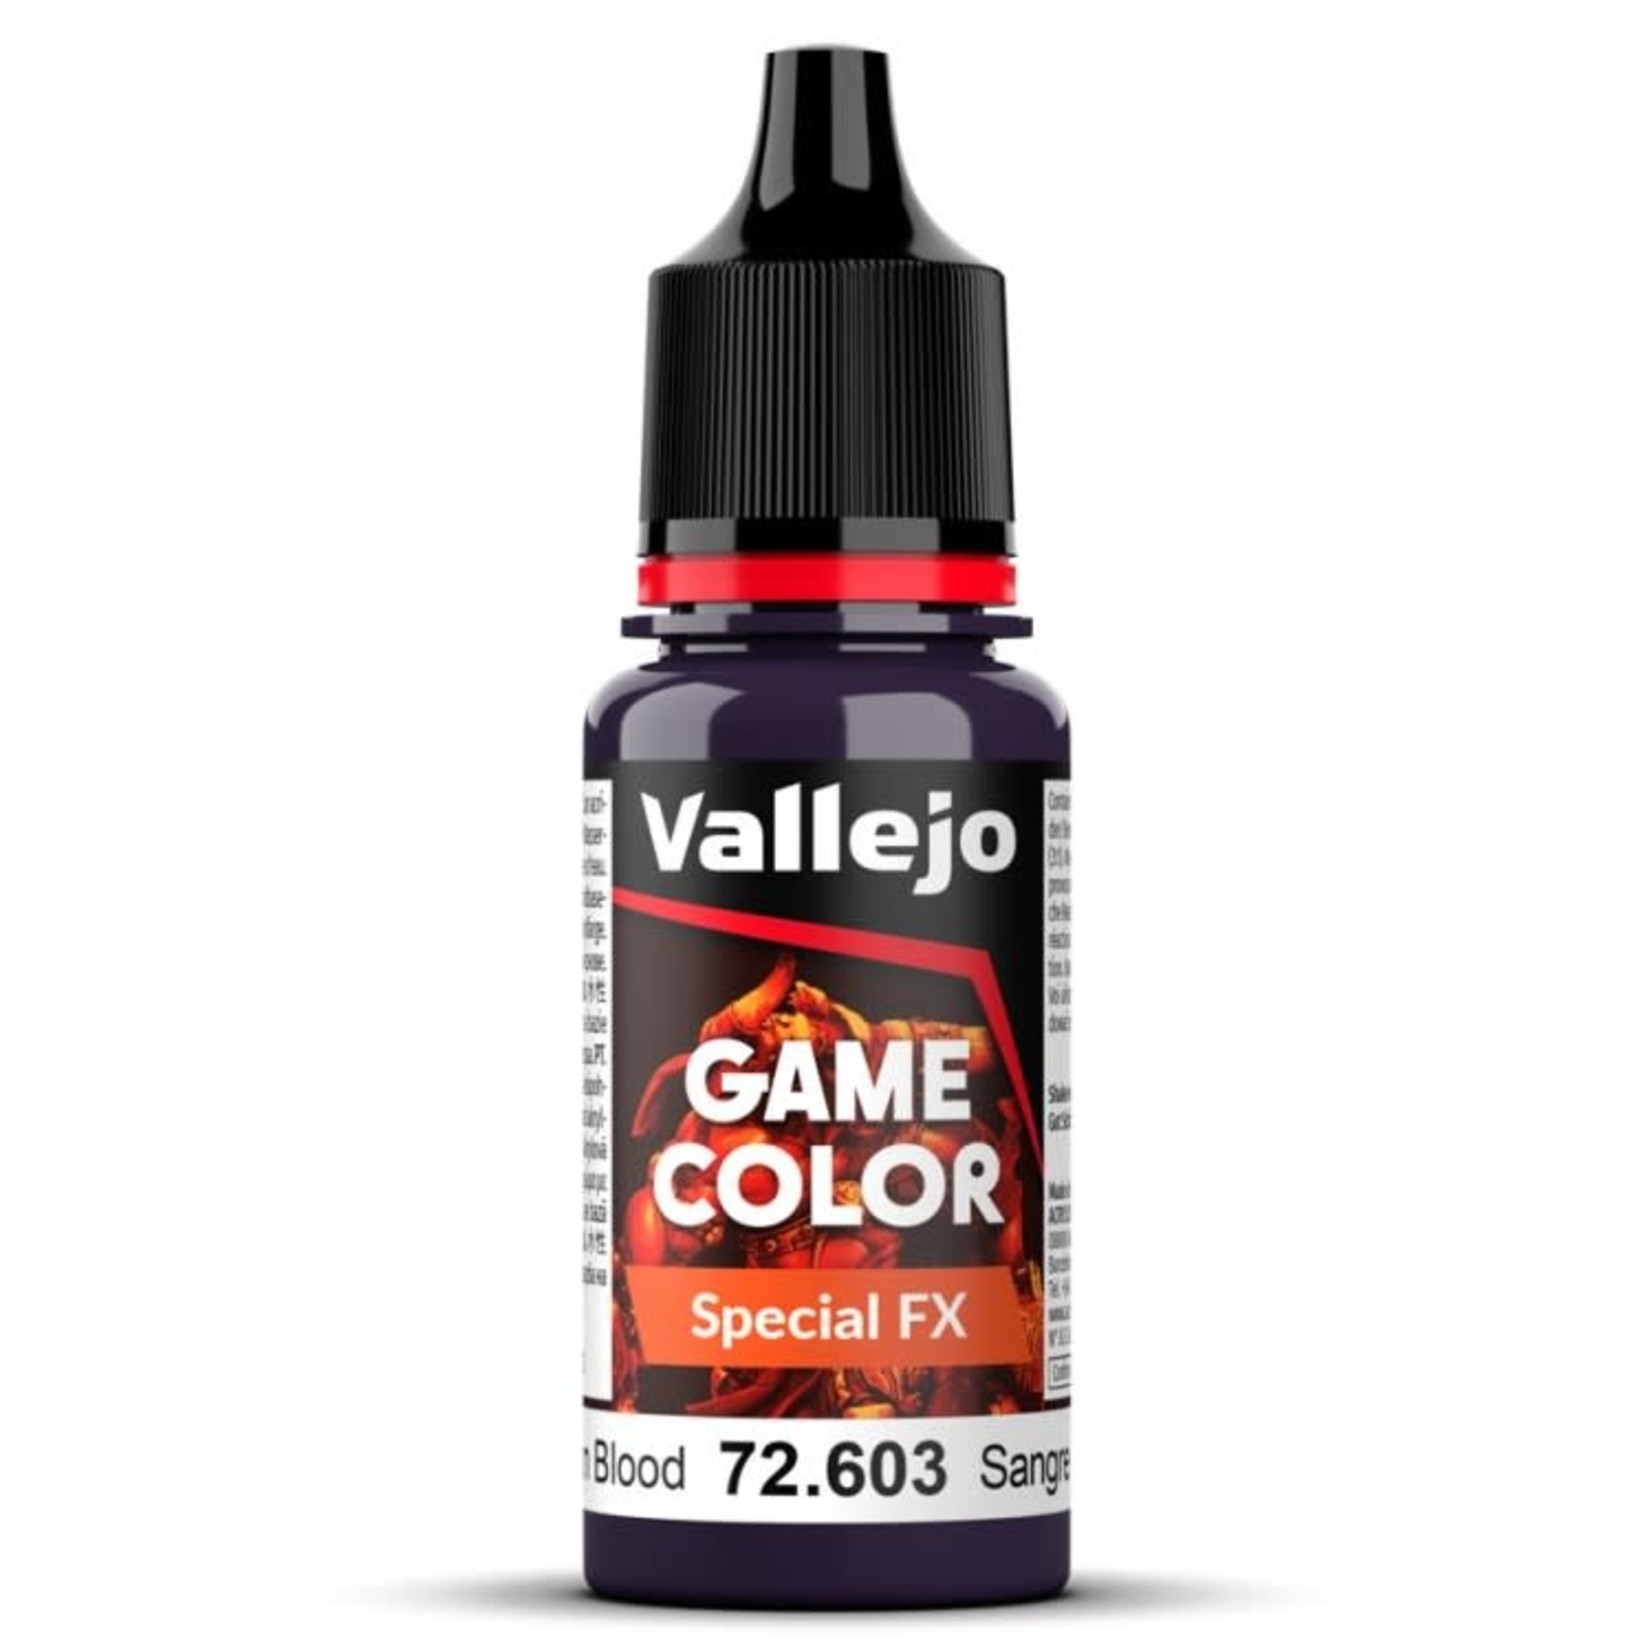 Vallejo Paint: Game Color, Special FX (Demon Blood)